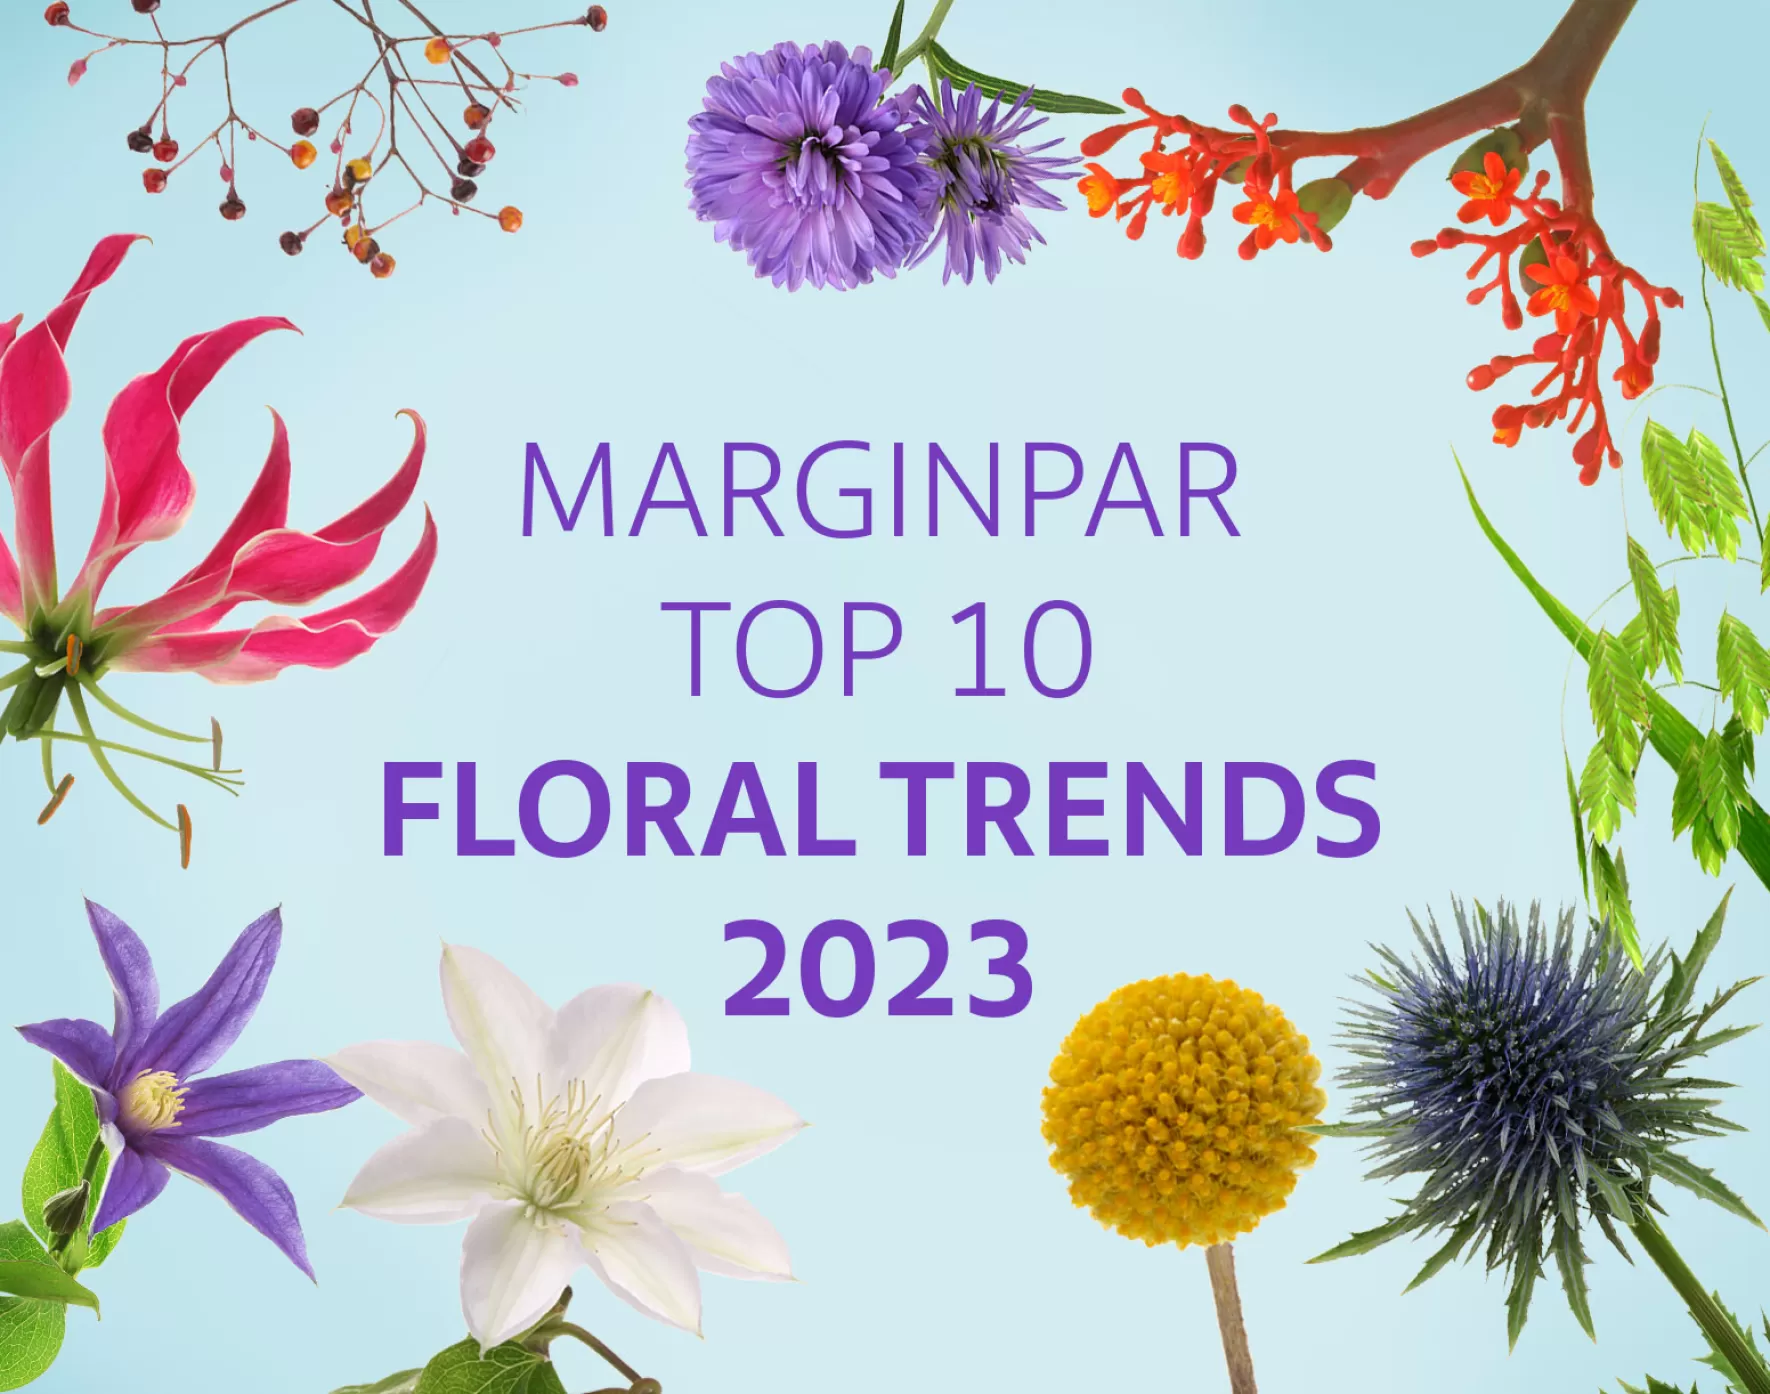 The Top Winter Flower Trends in 2023